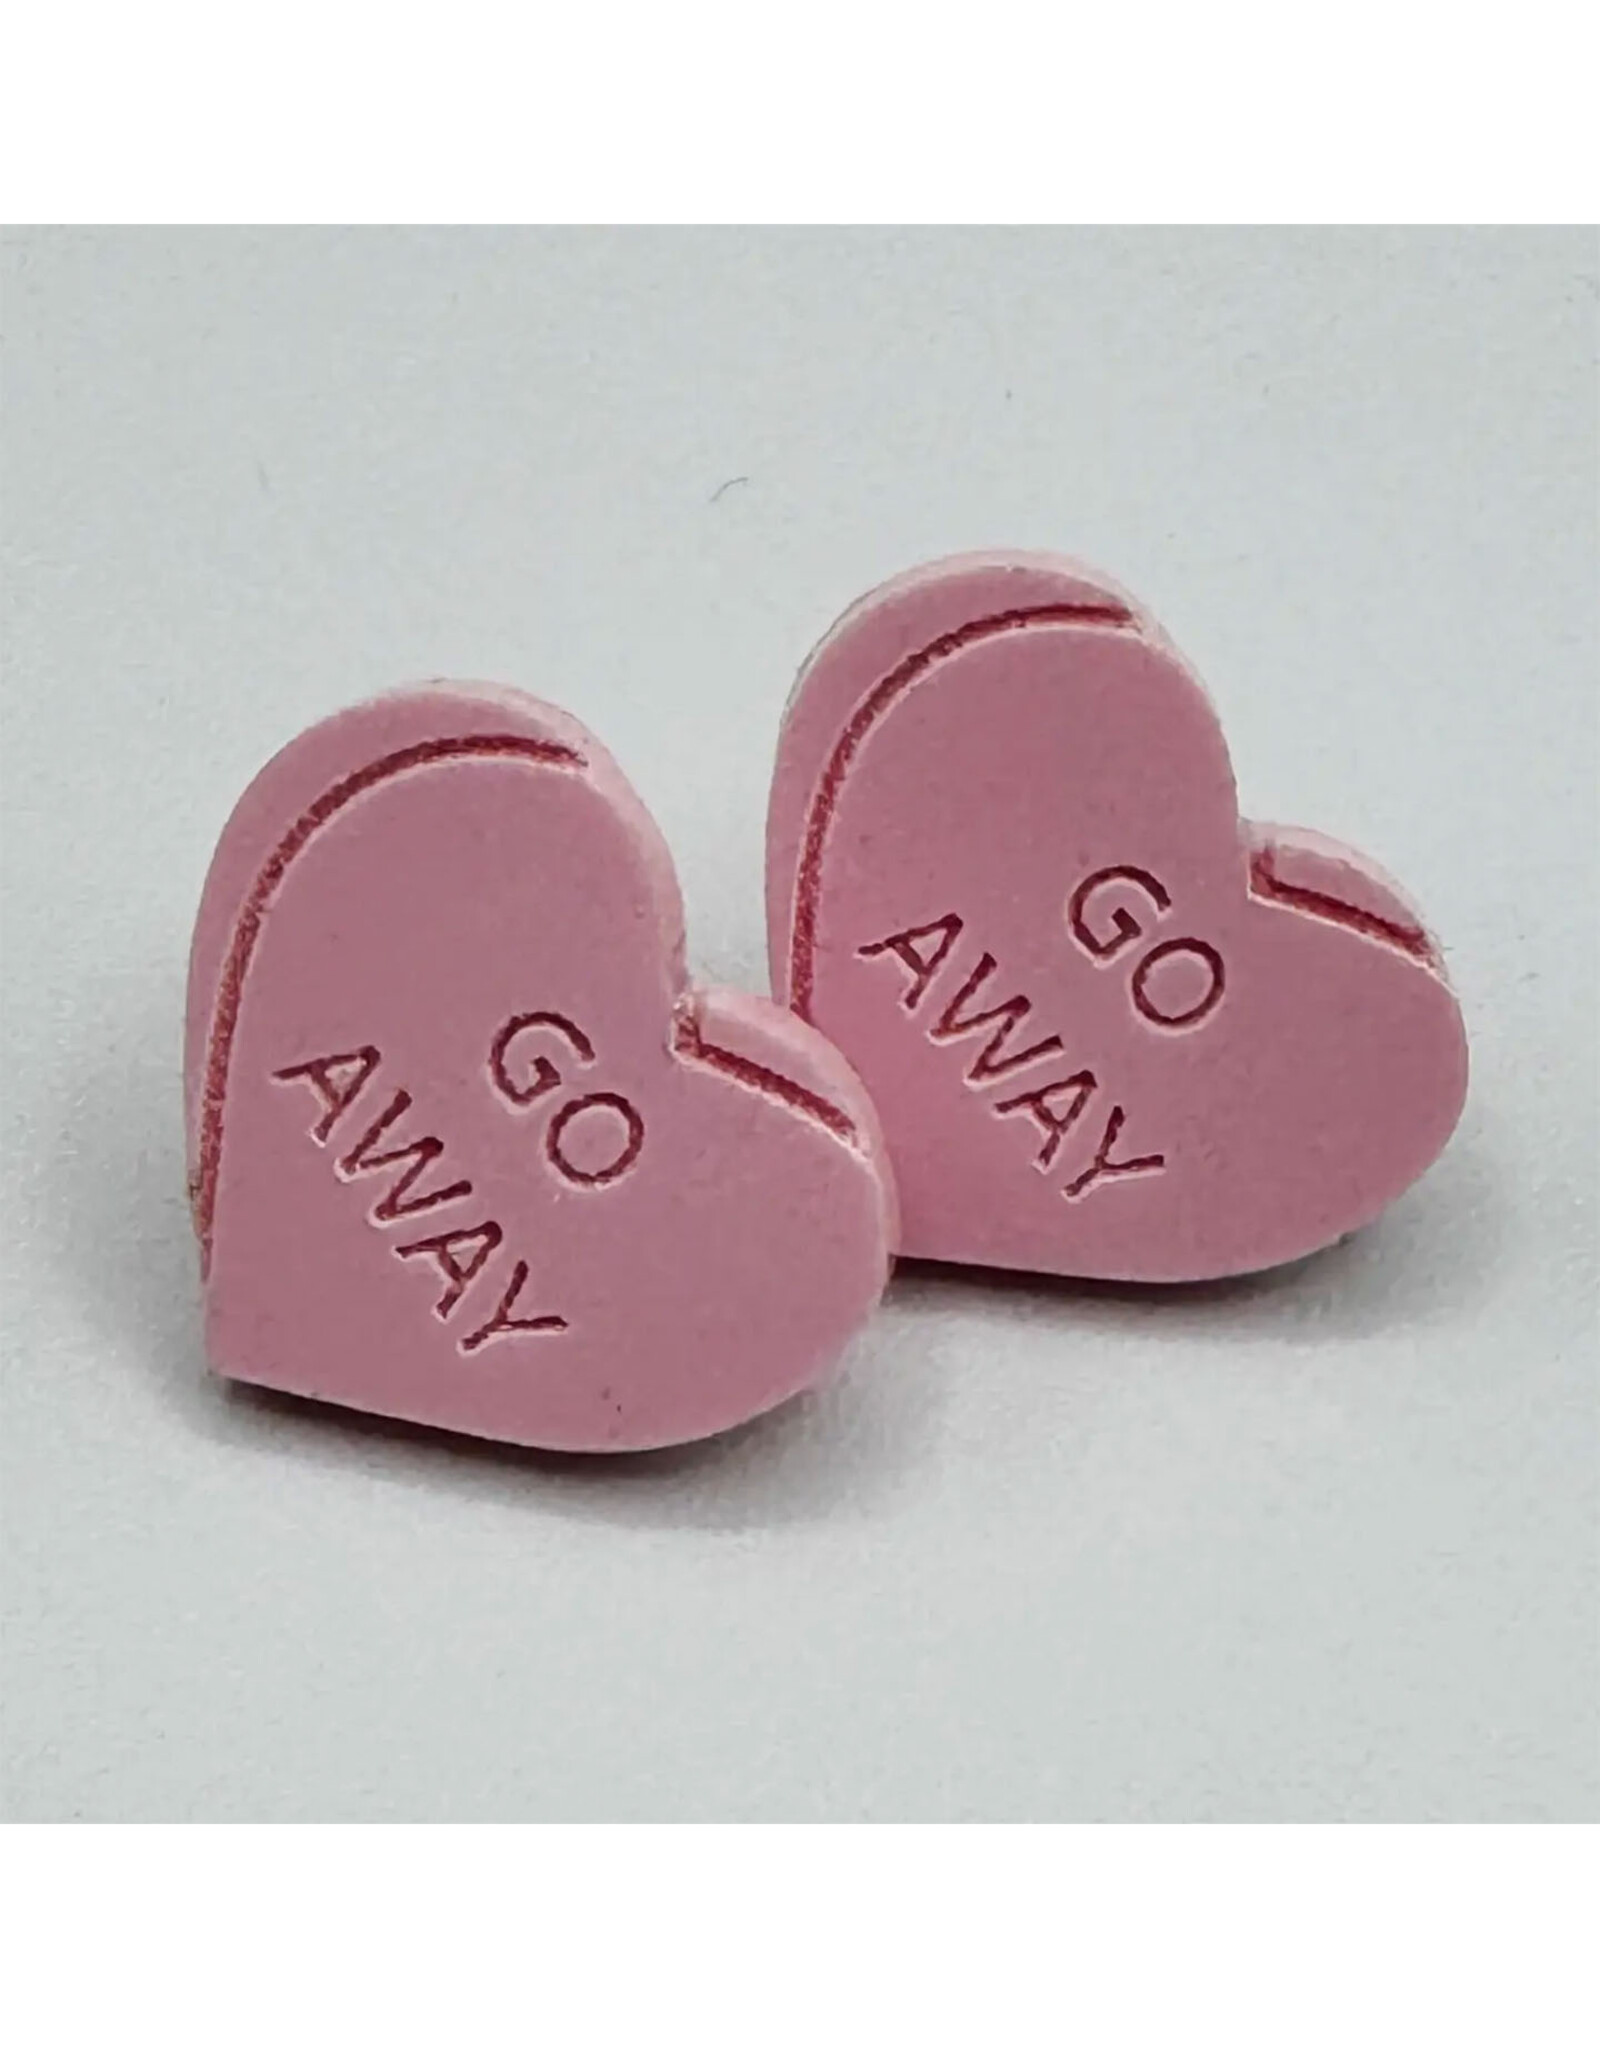 Heart Candy "Go Away" Stud Earrings - Pink